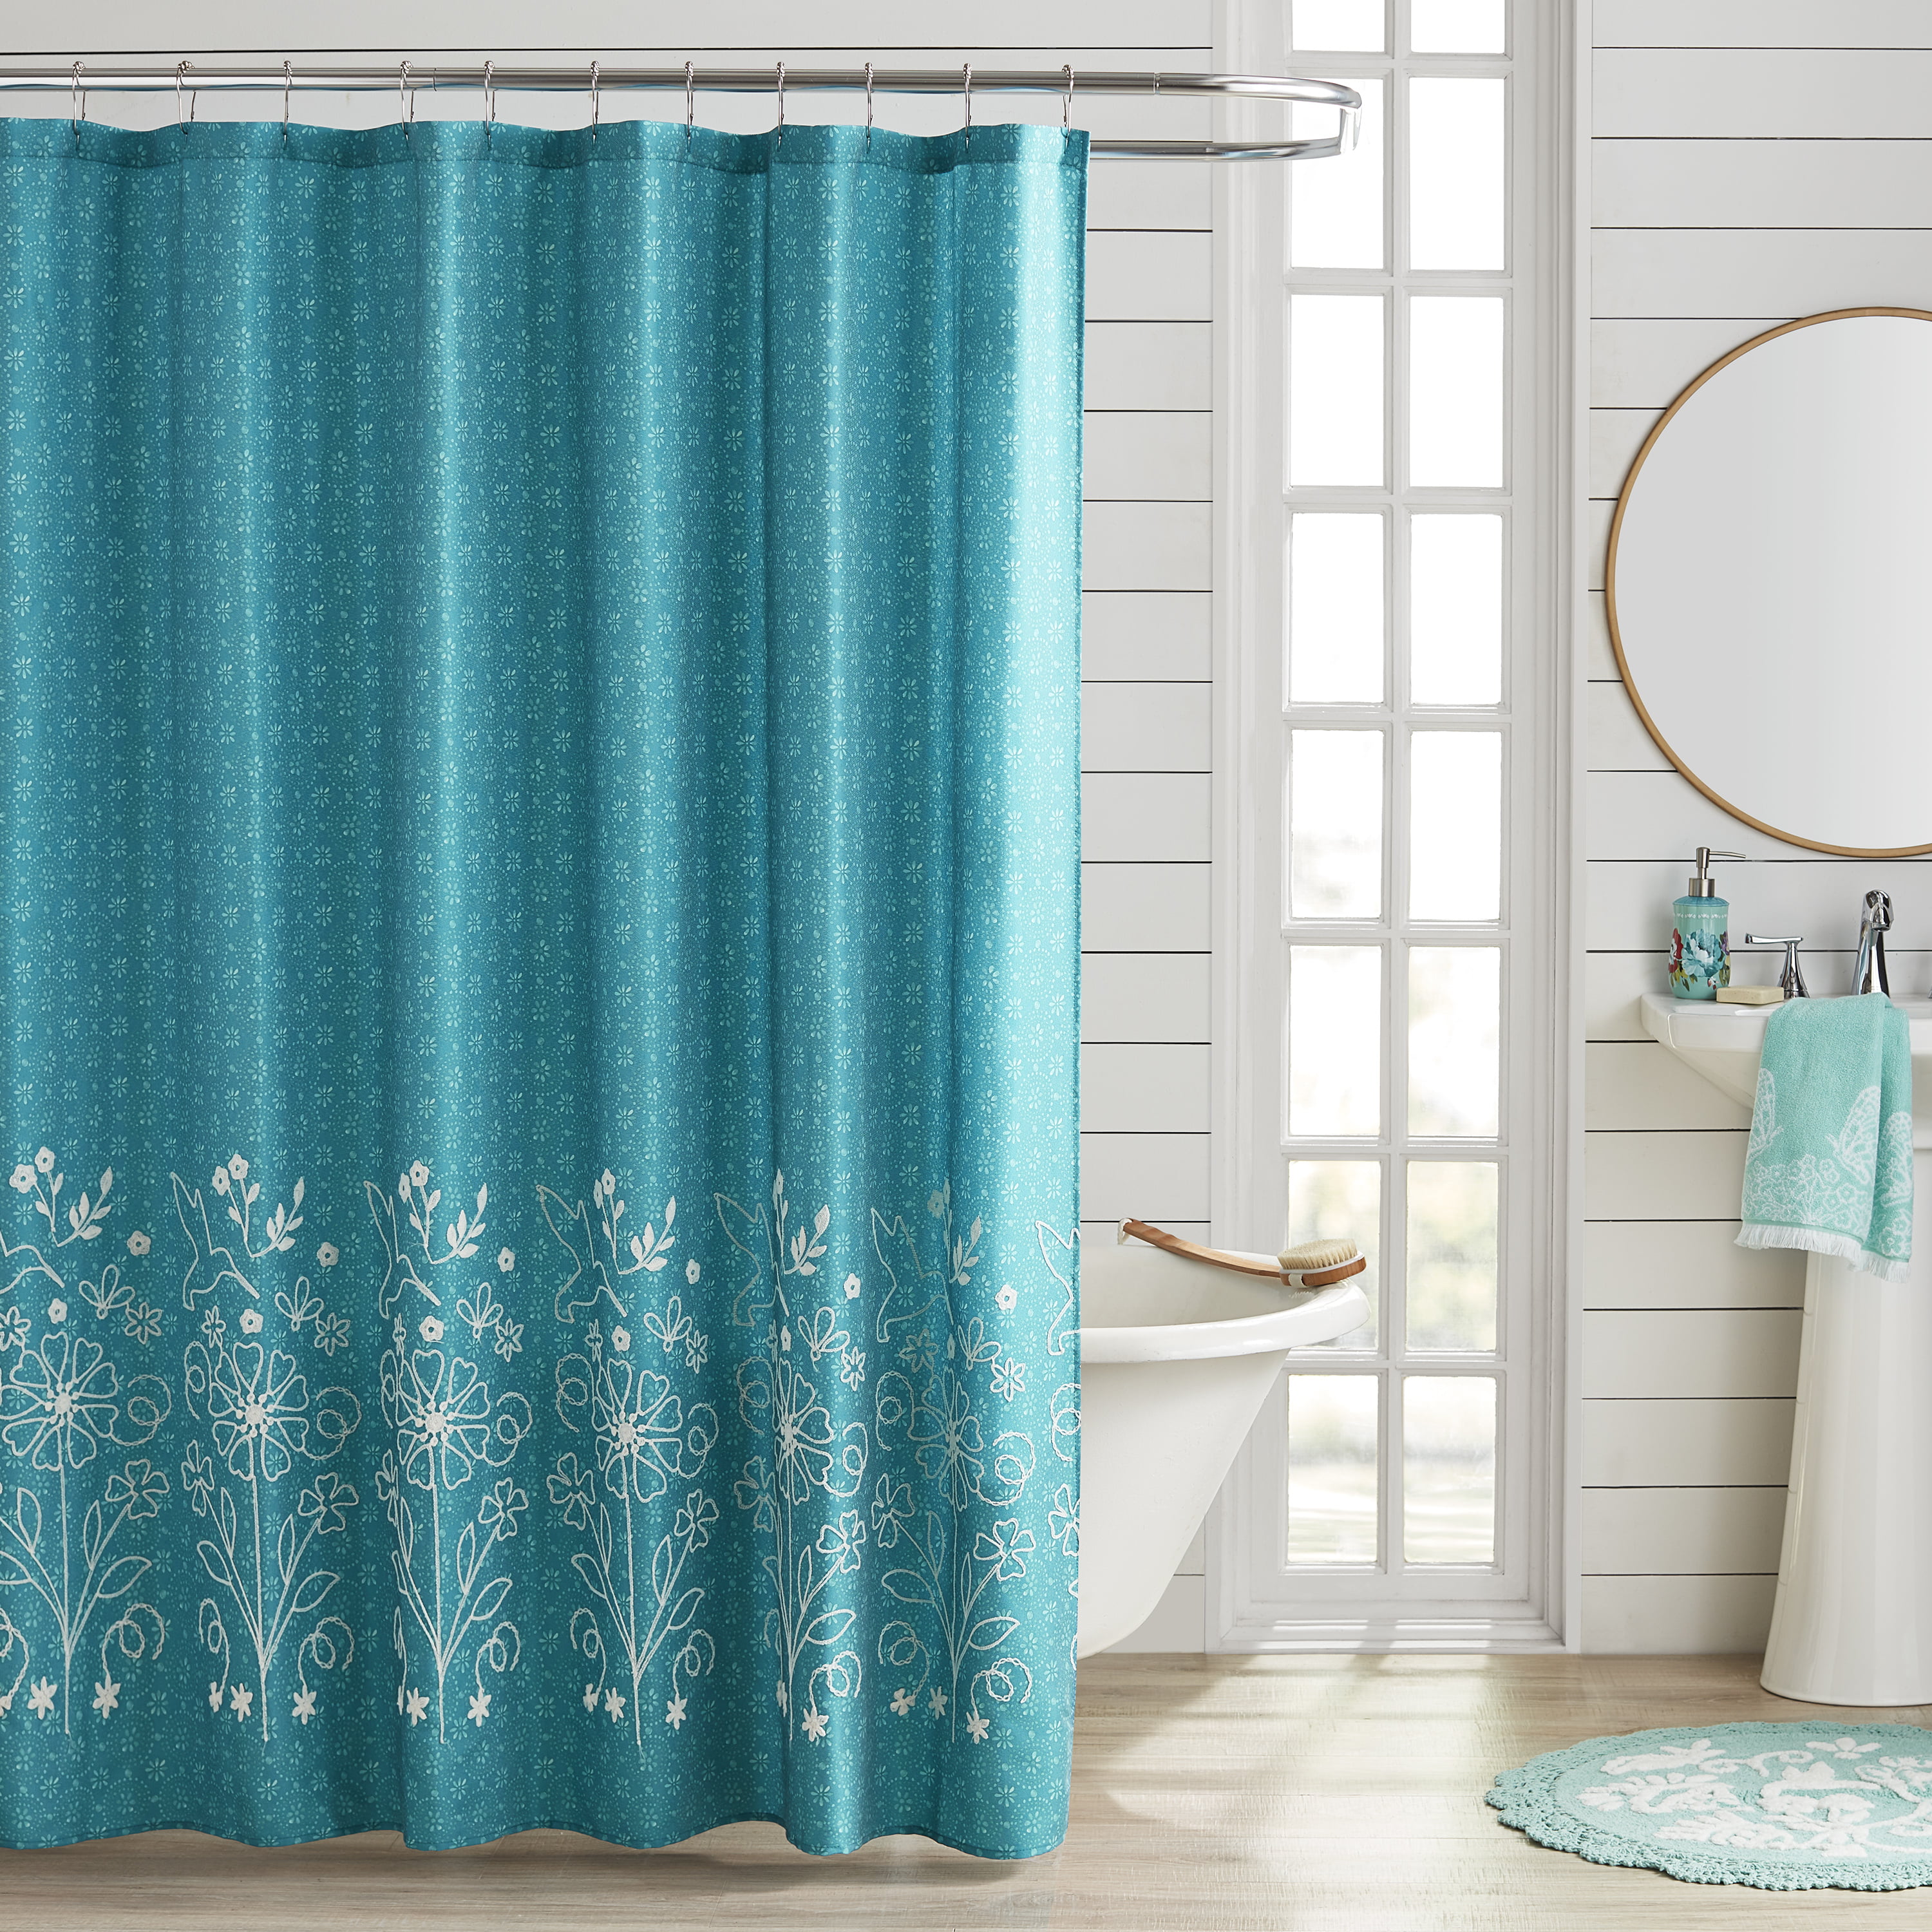 Fabric Waterproof Shower Curtain Dorm Decor Bathroom Curtain With Hooks lizard 